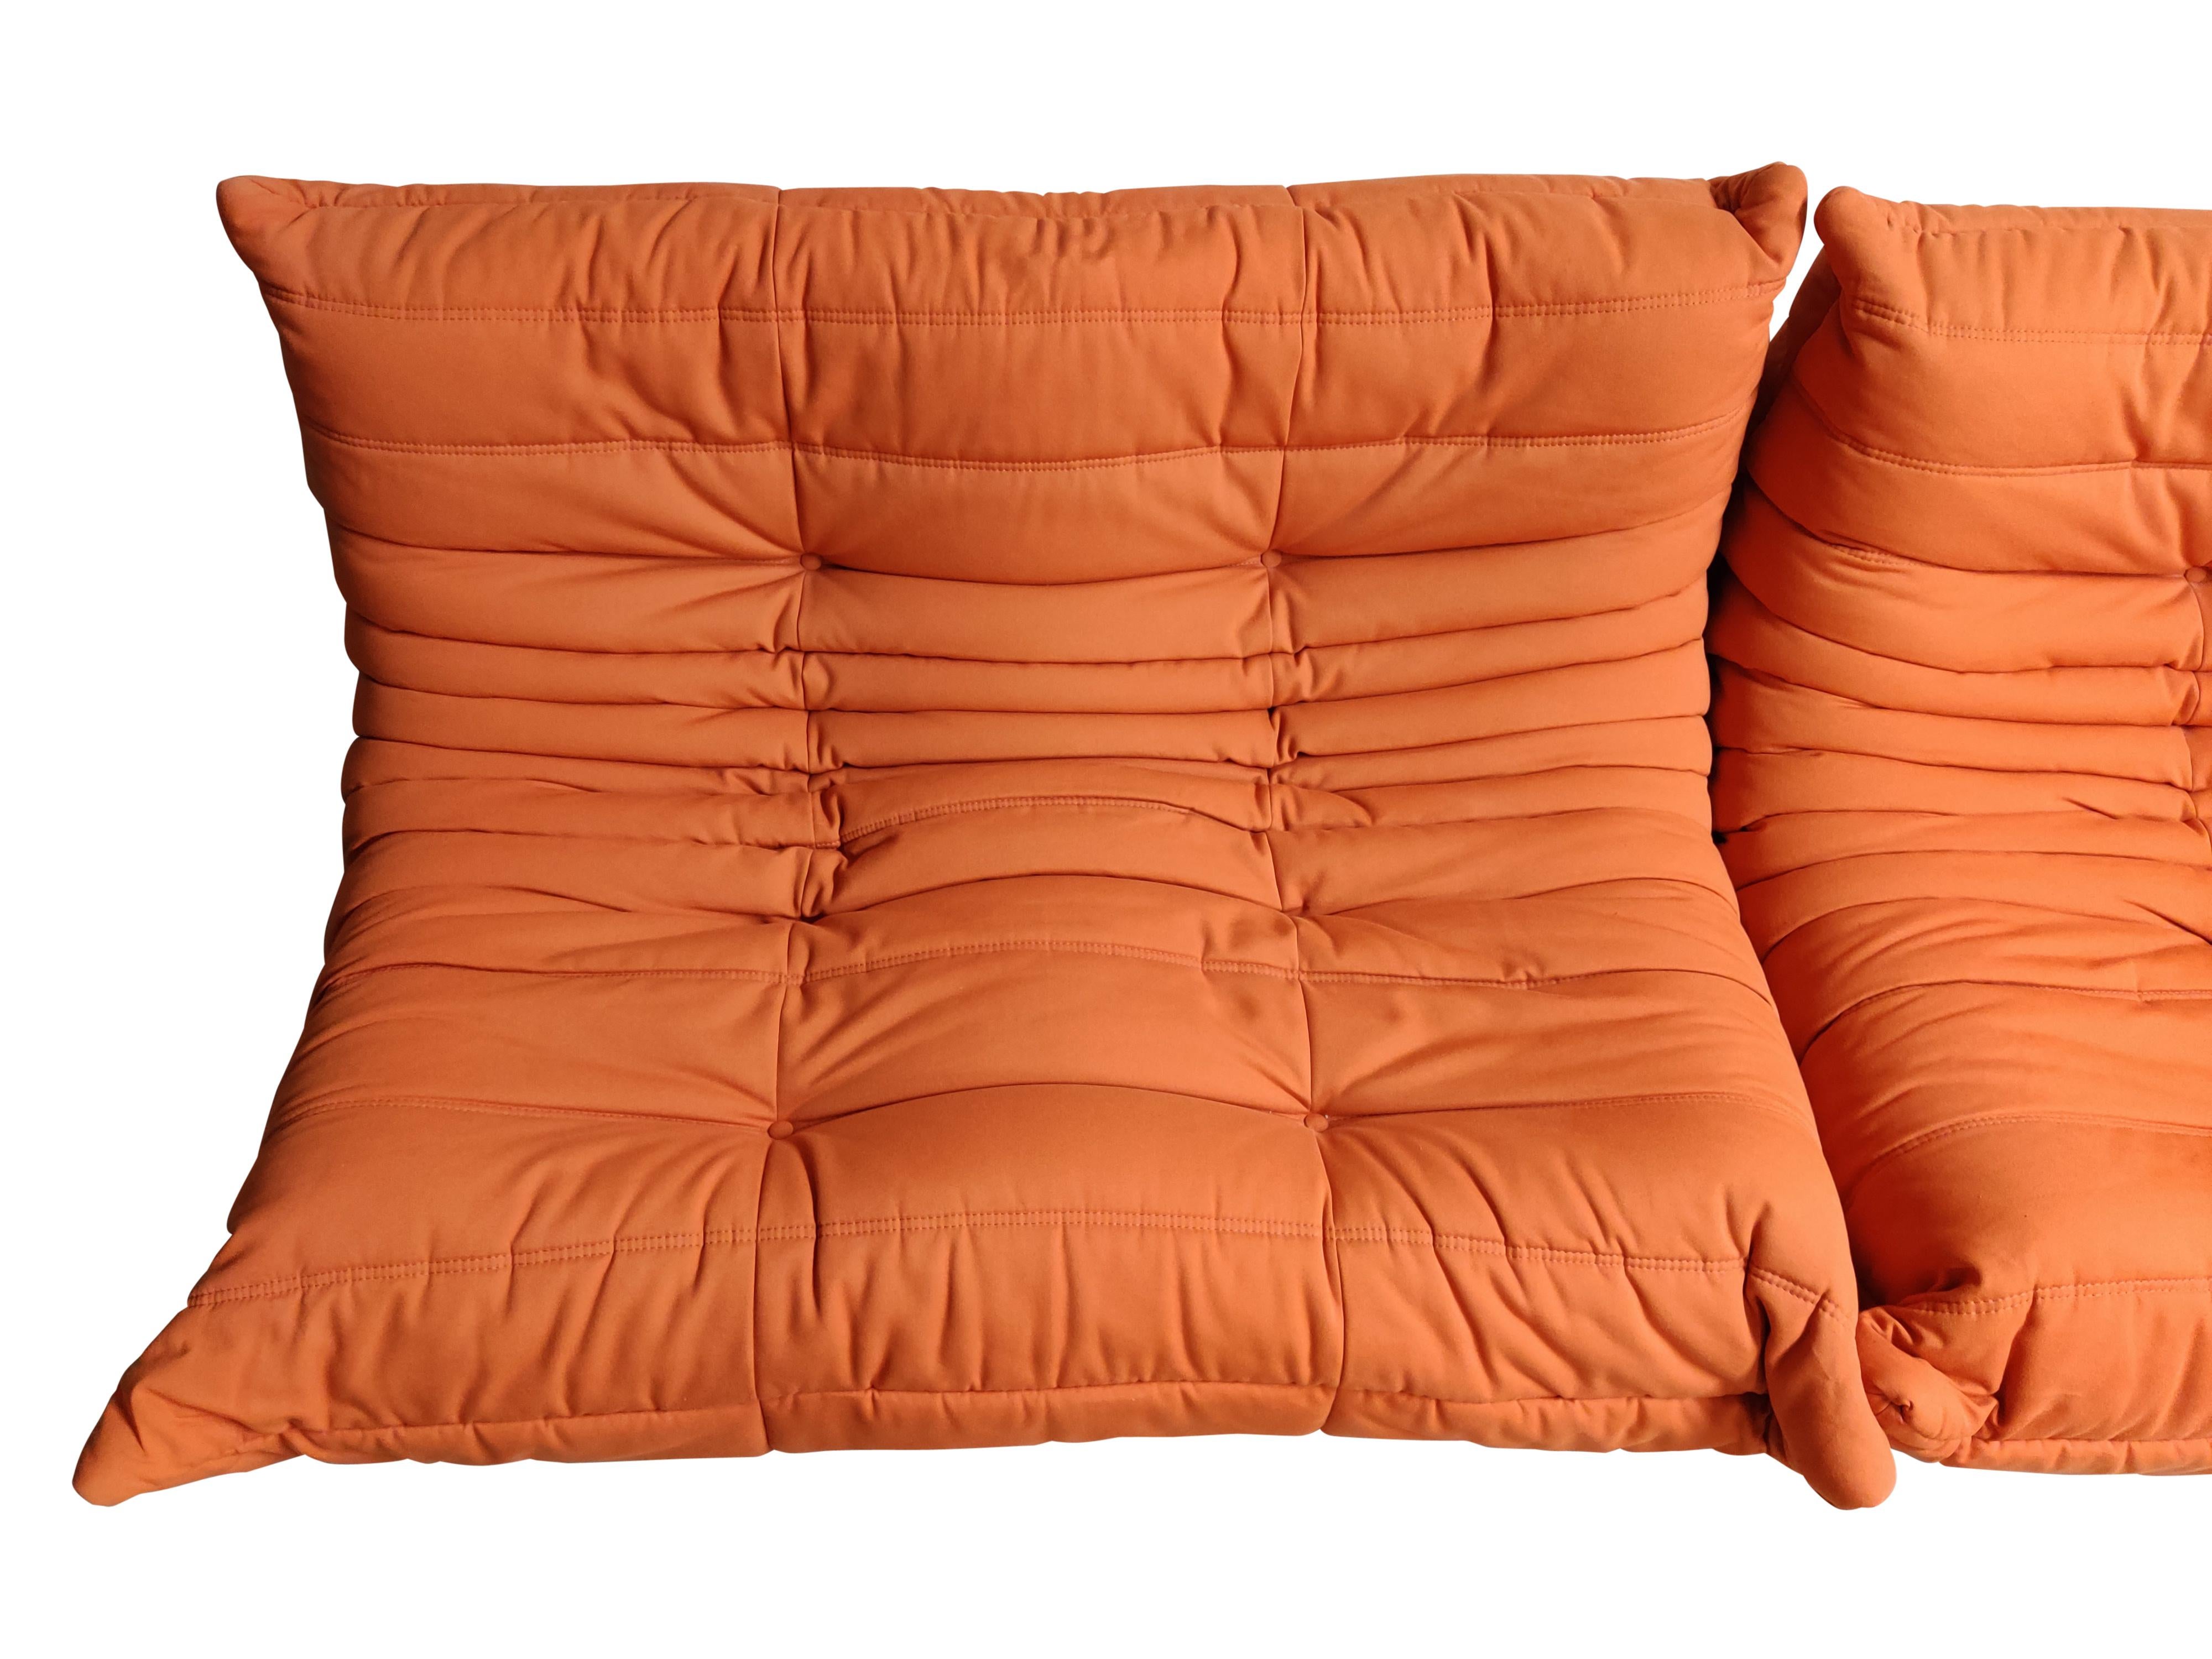 Modular 3-Piece Orange Sofa by Michel Ducaroy for Ligne Roset 1